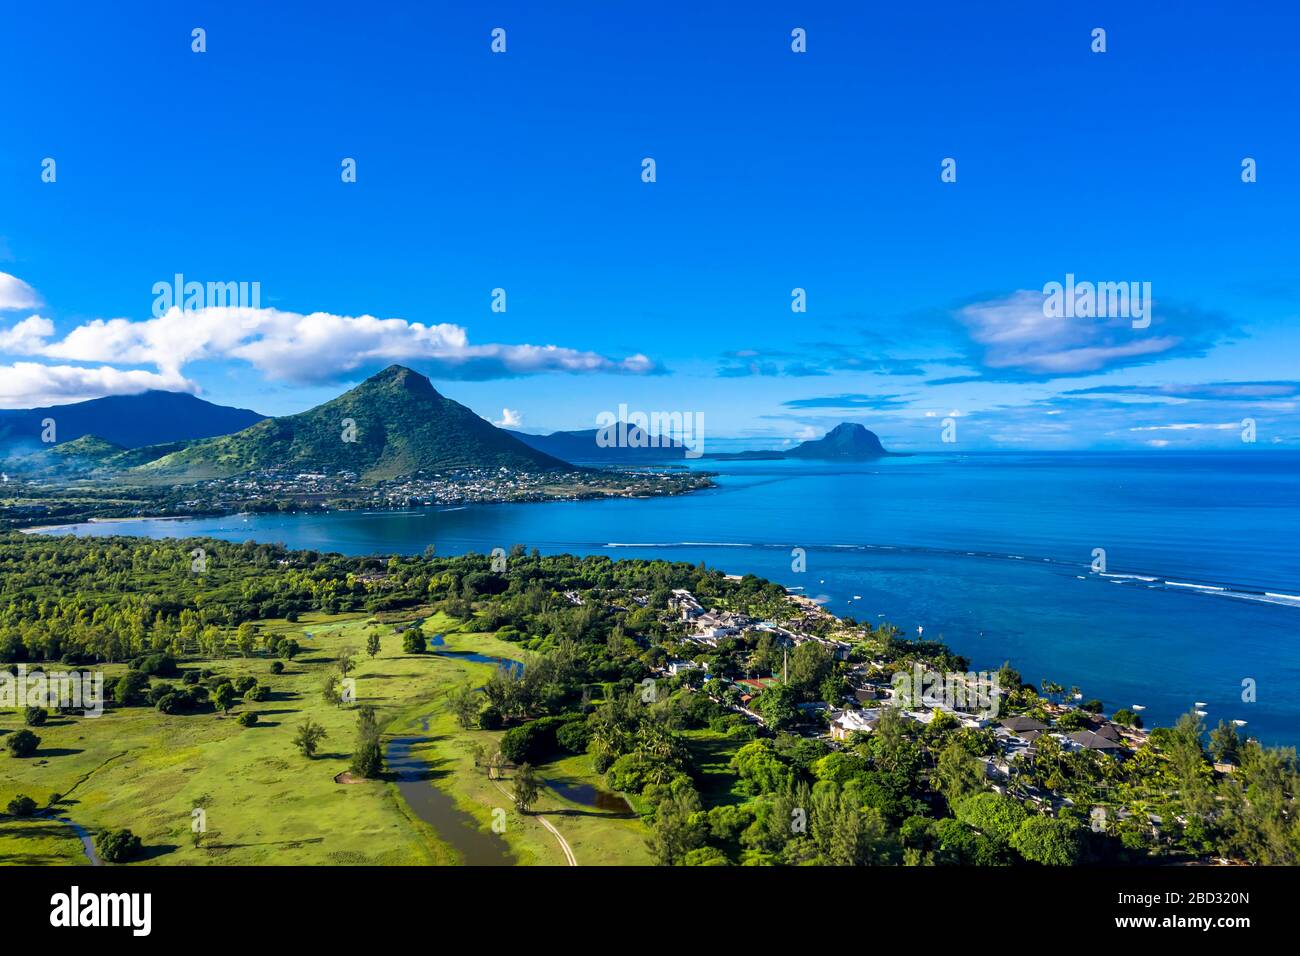 Aerial view, coastline, behind the mountain Tourelle du Tamarin, Flic en Flac, Mauritius Stock Photo